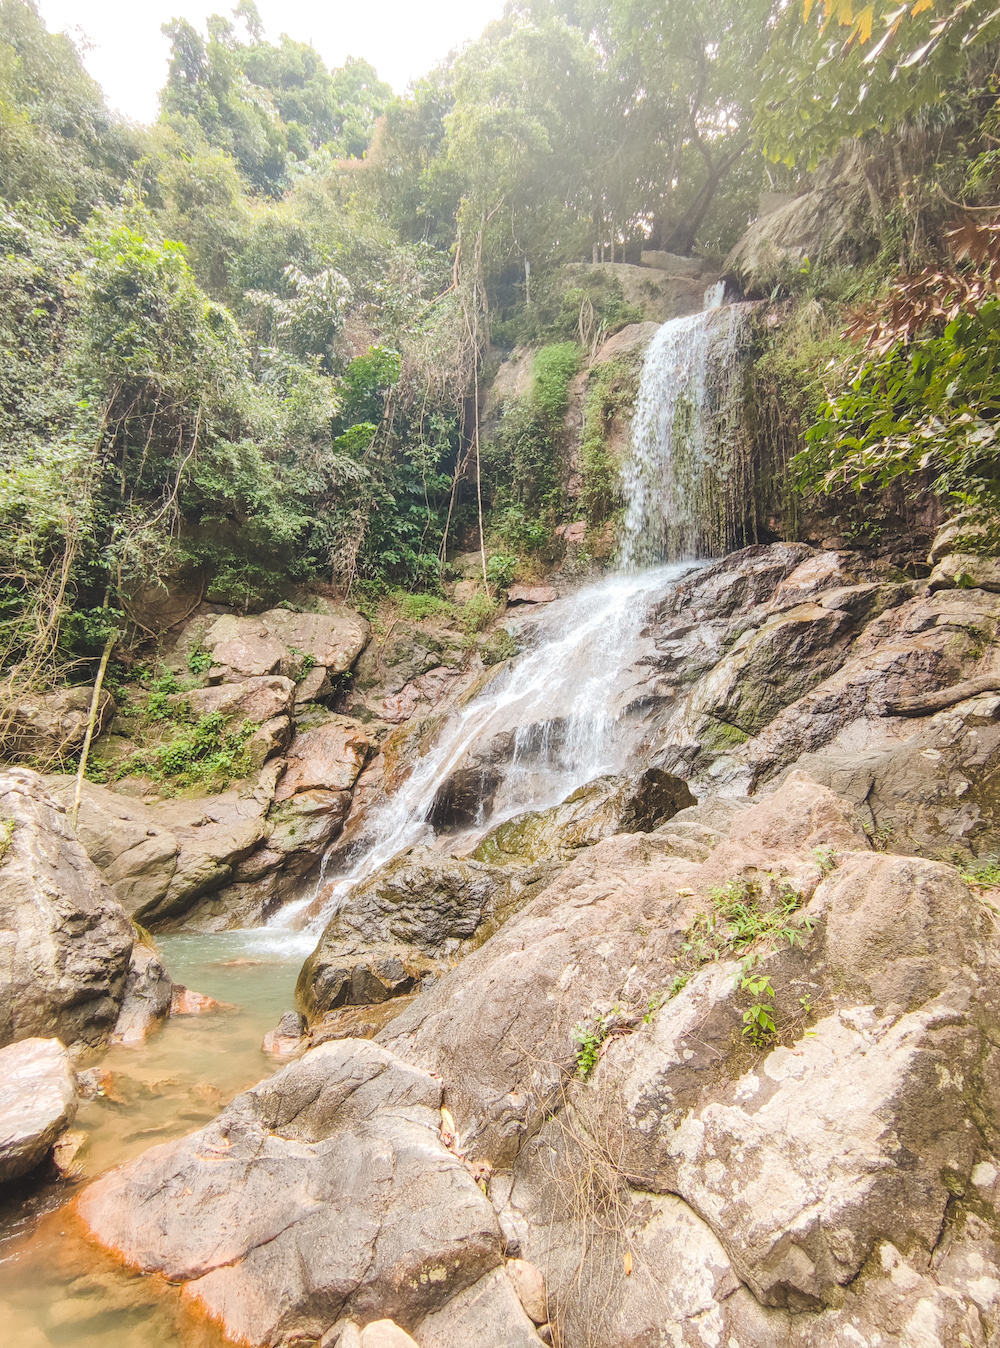 Koh Samui waterfall